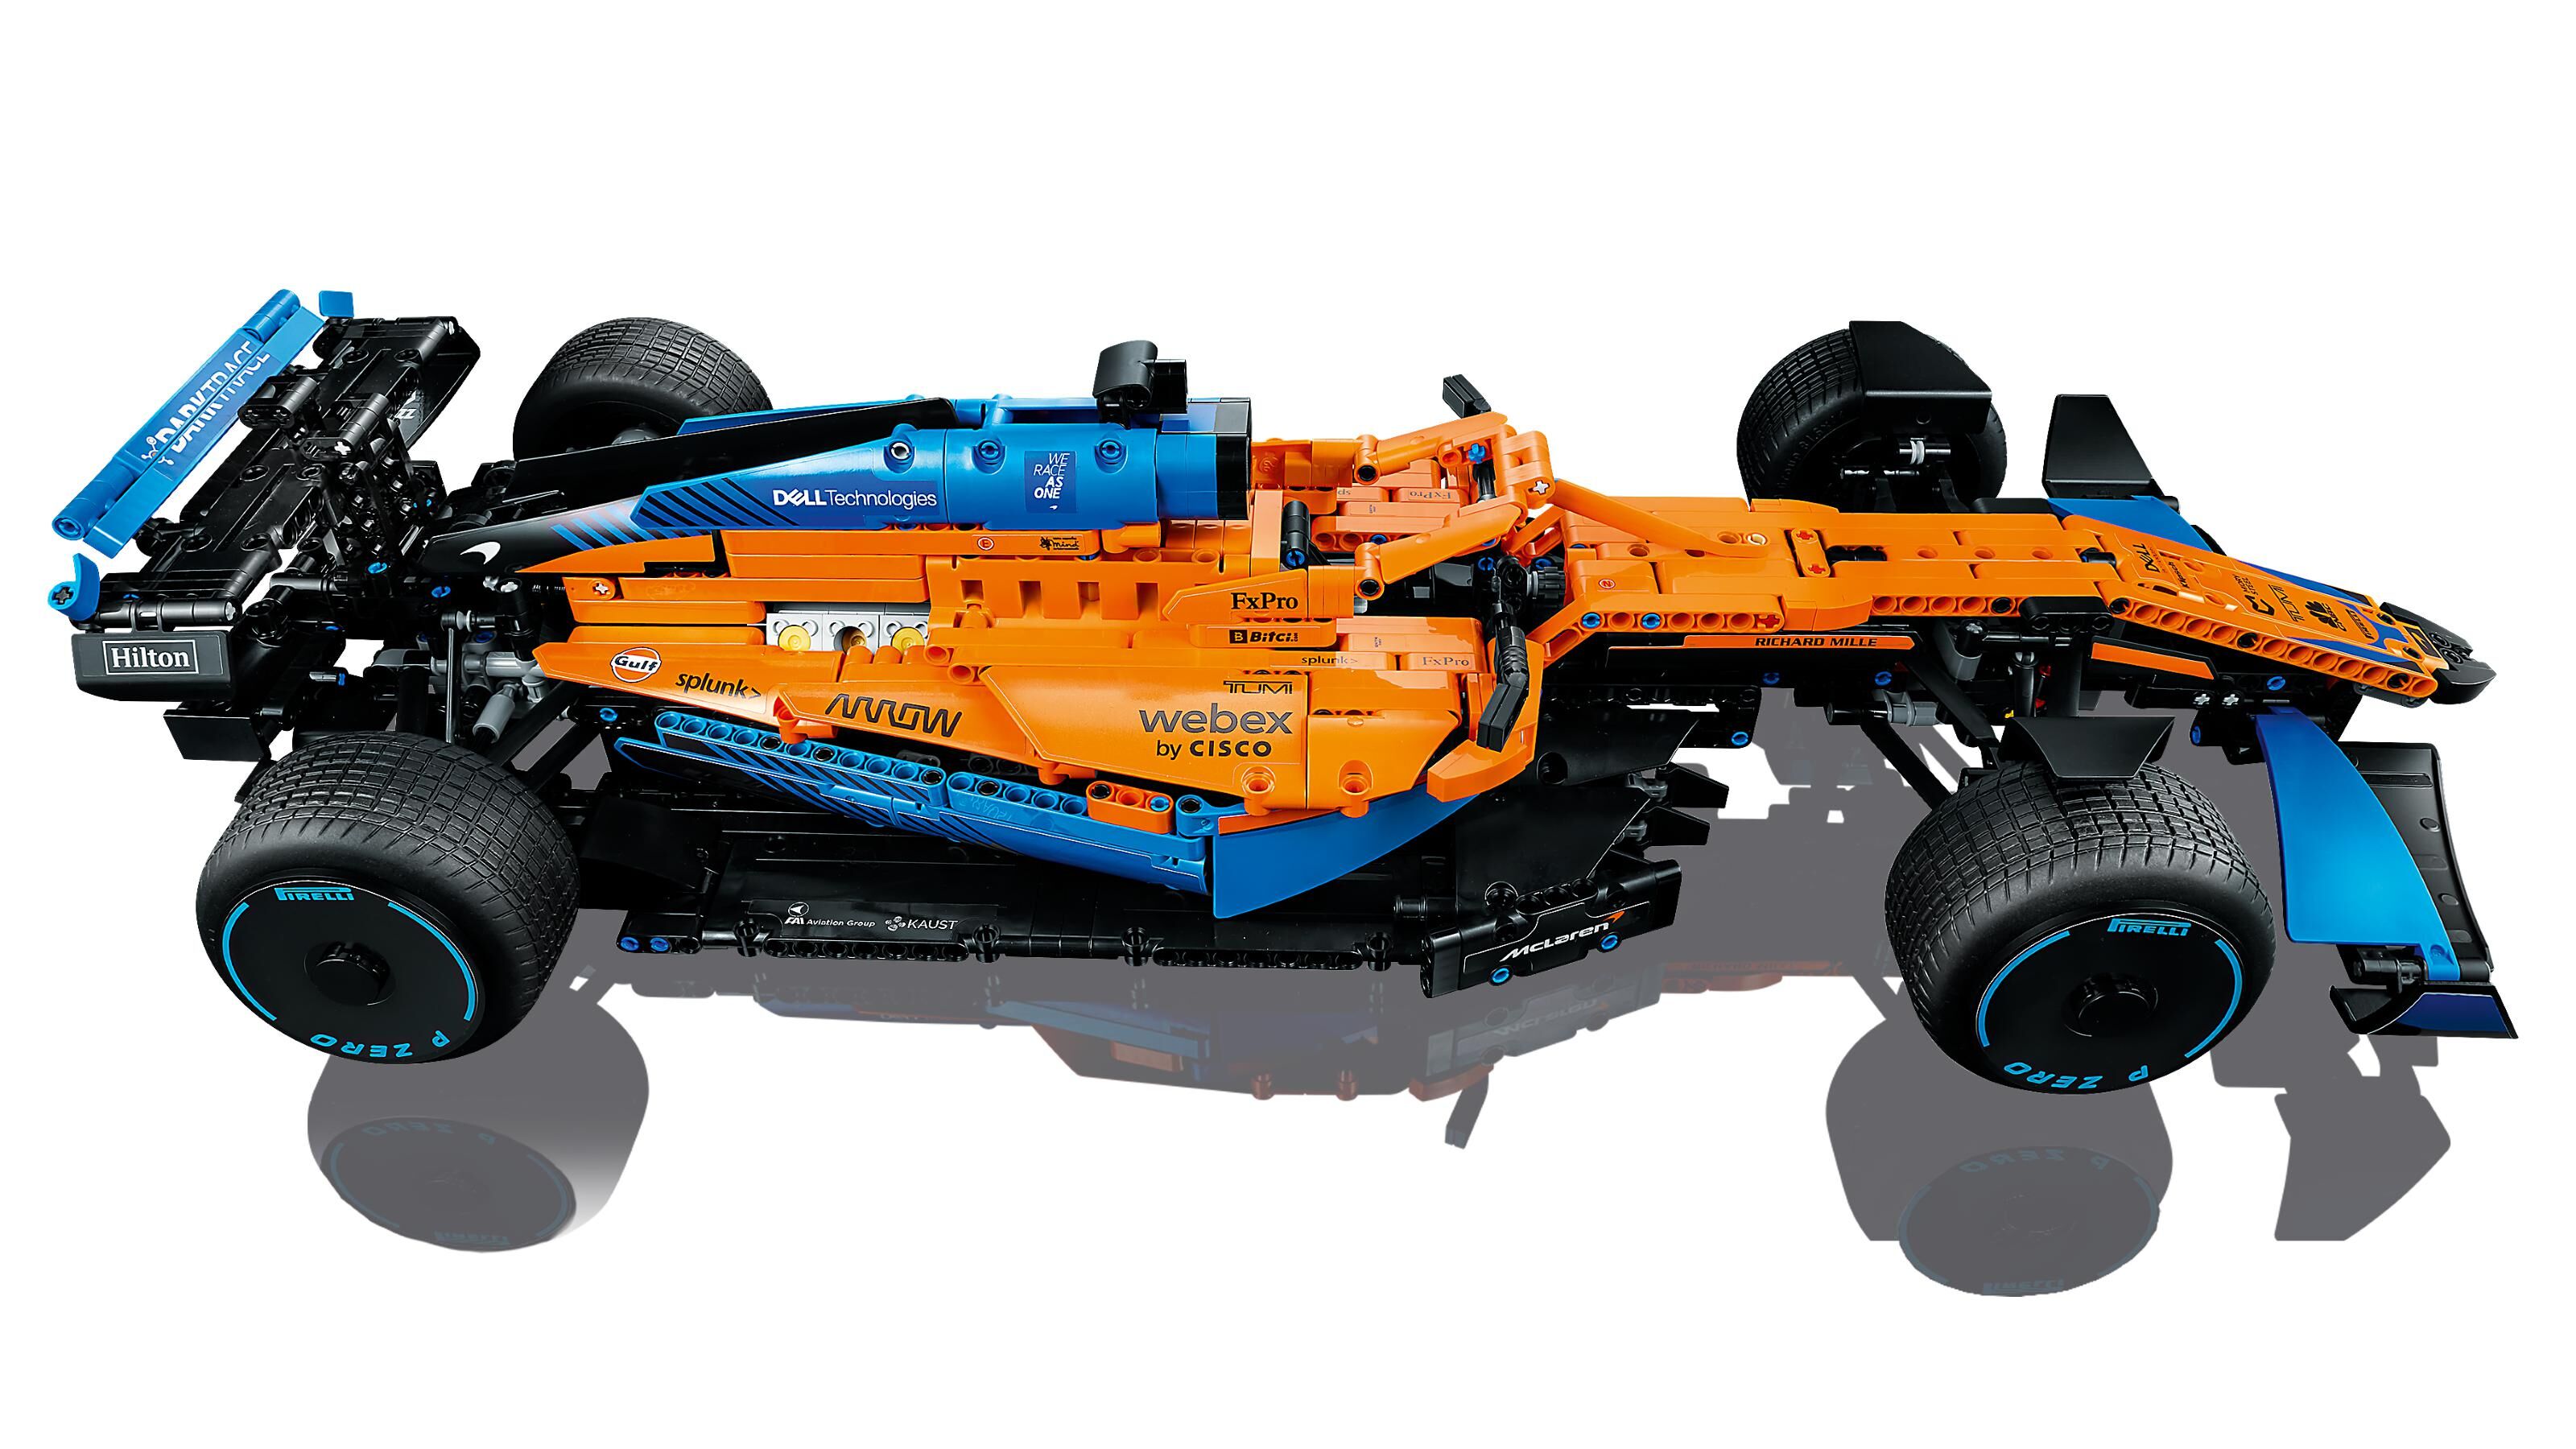 42141 LEGO Technic McLaren Formula 1 2022 F1 V6 Cylinder Race Car 1432pcs  18+